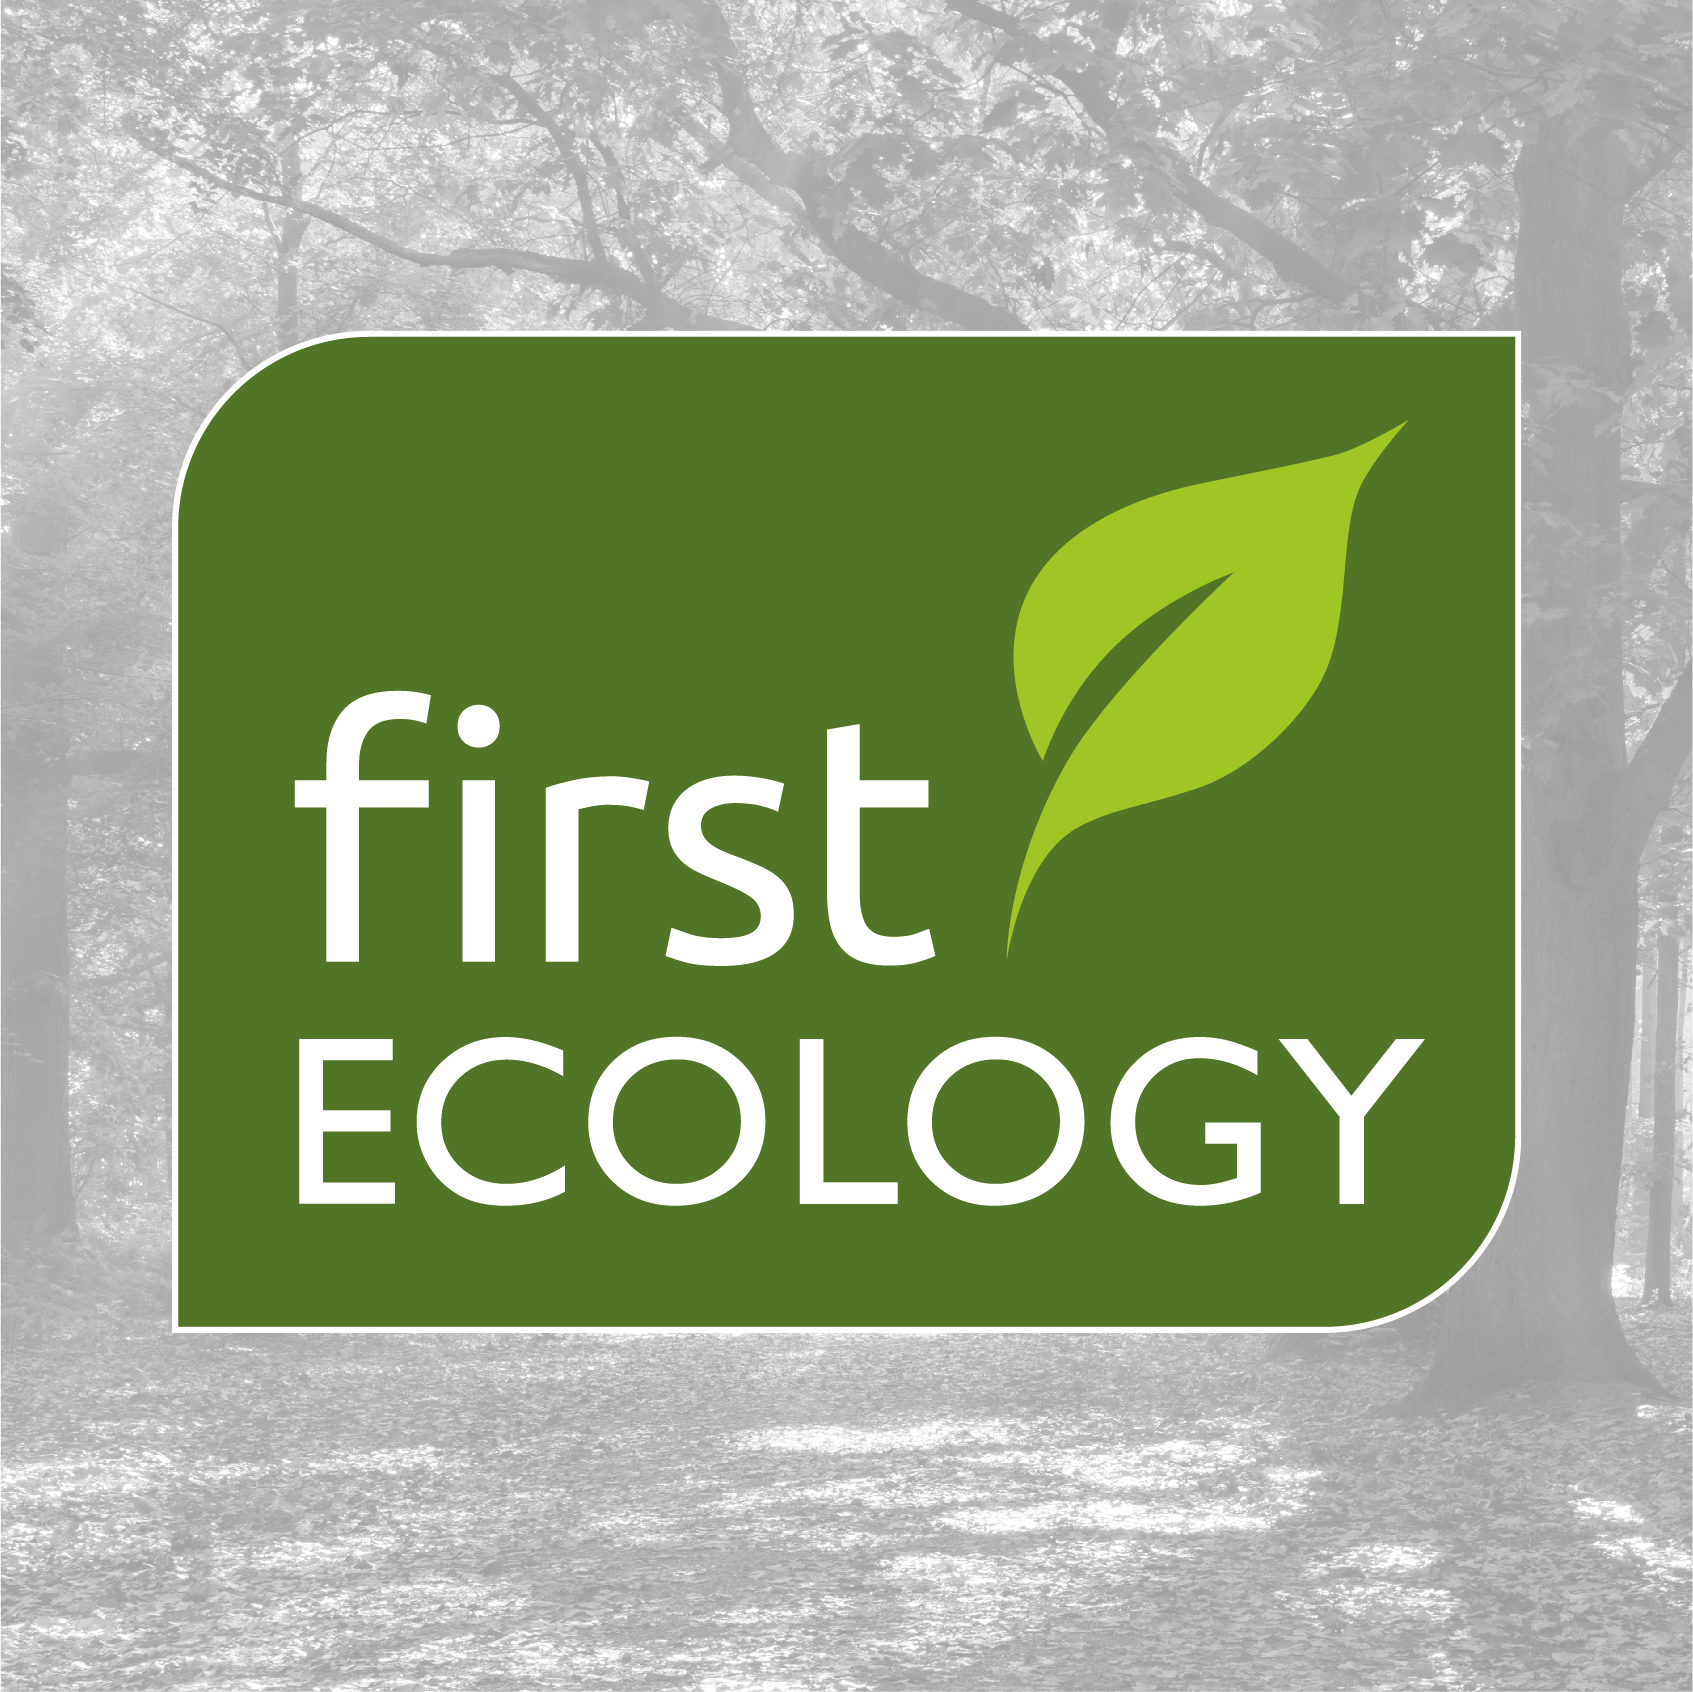 First Ecology branding